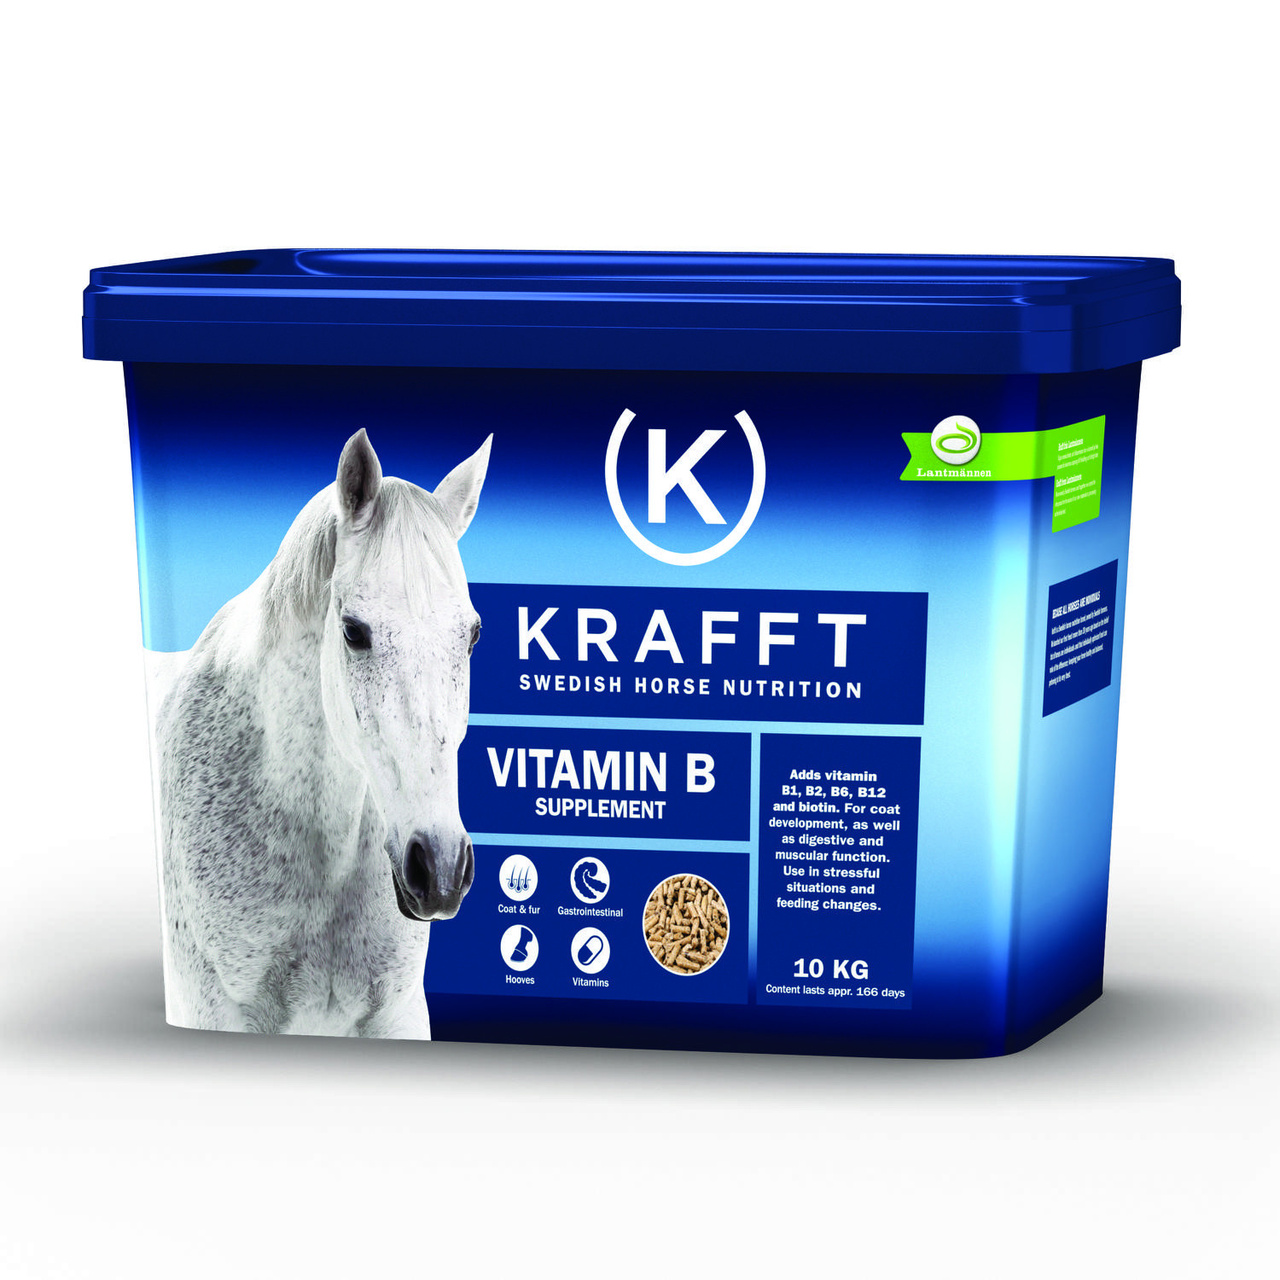 Krafft vitamin b 10kg